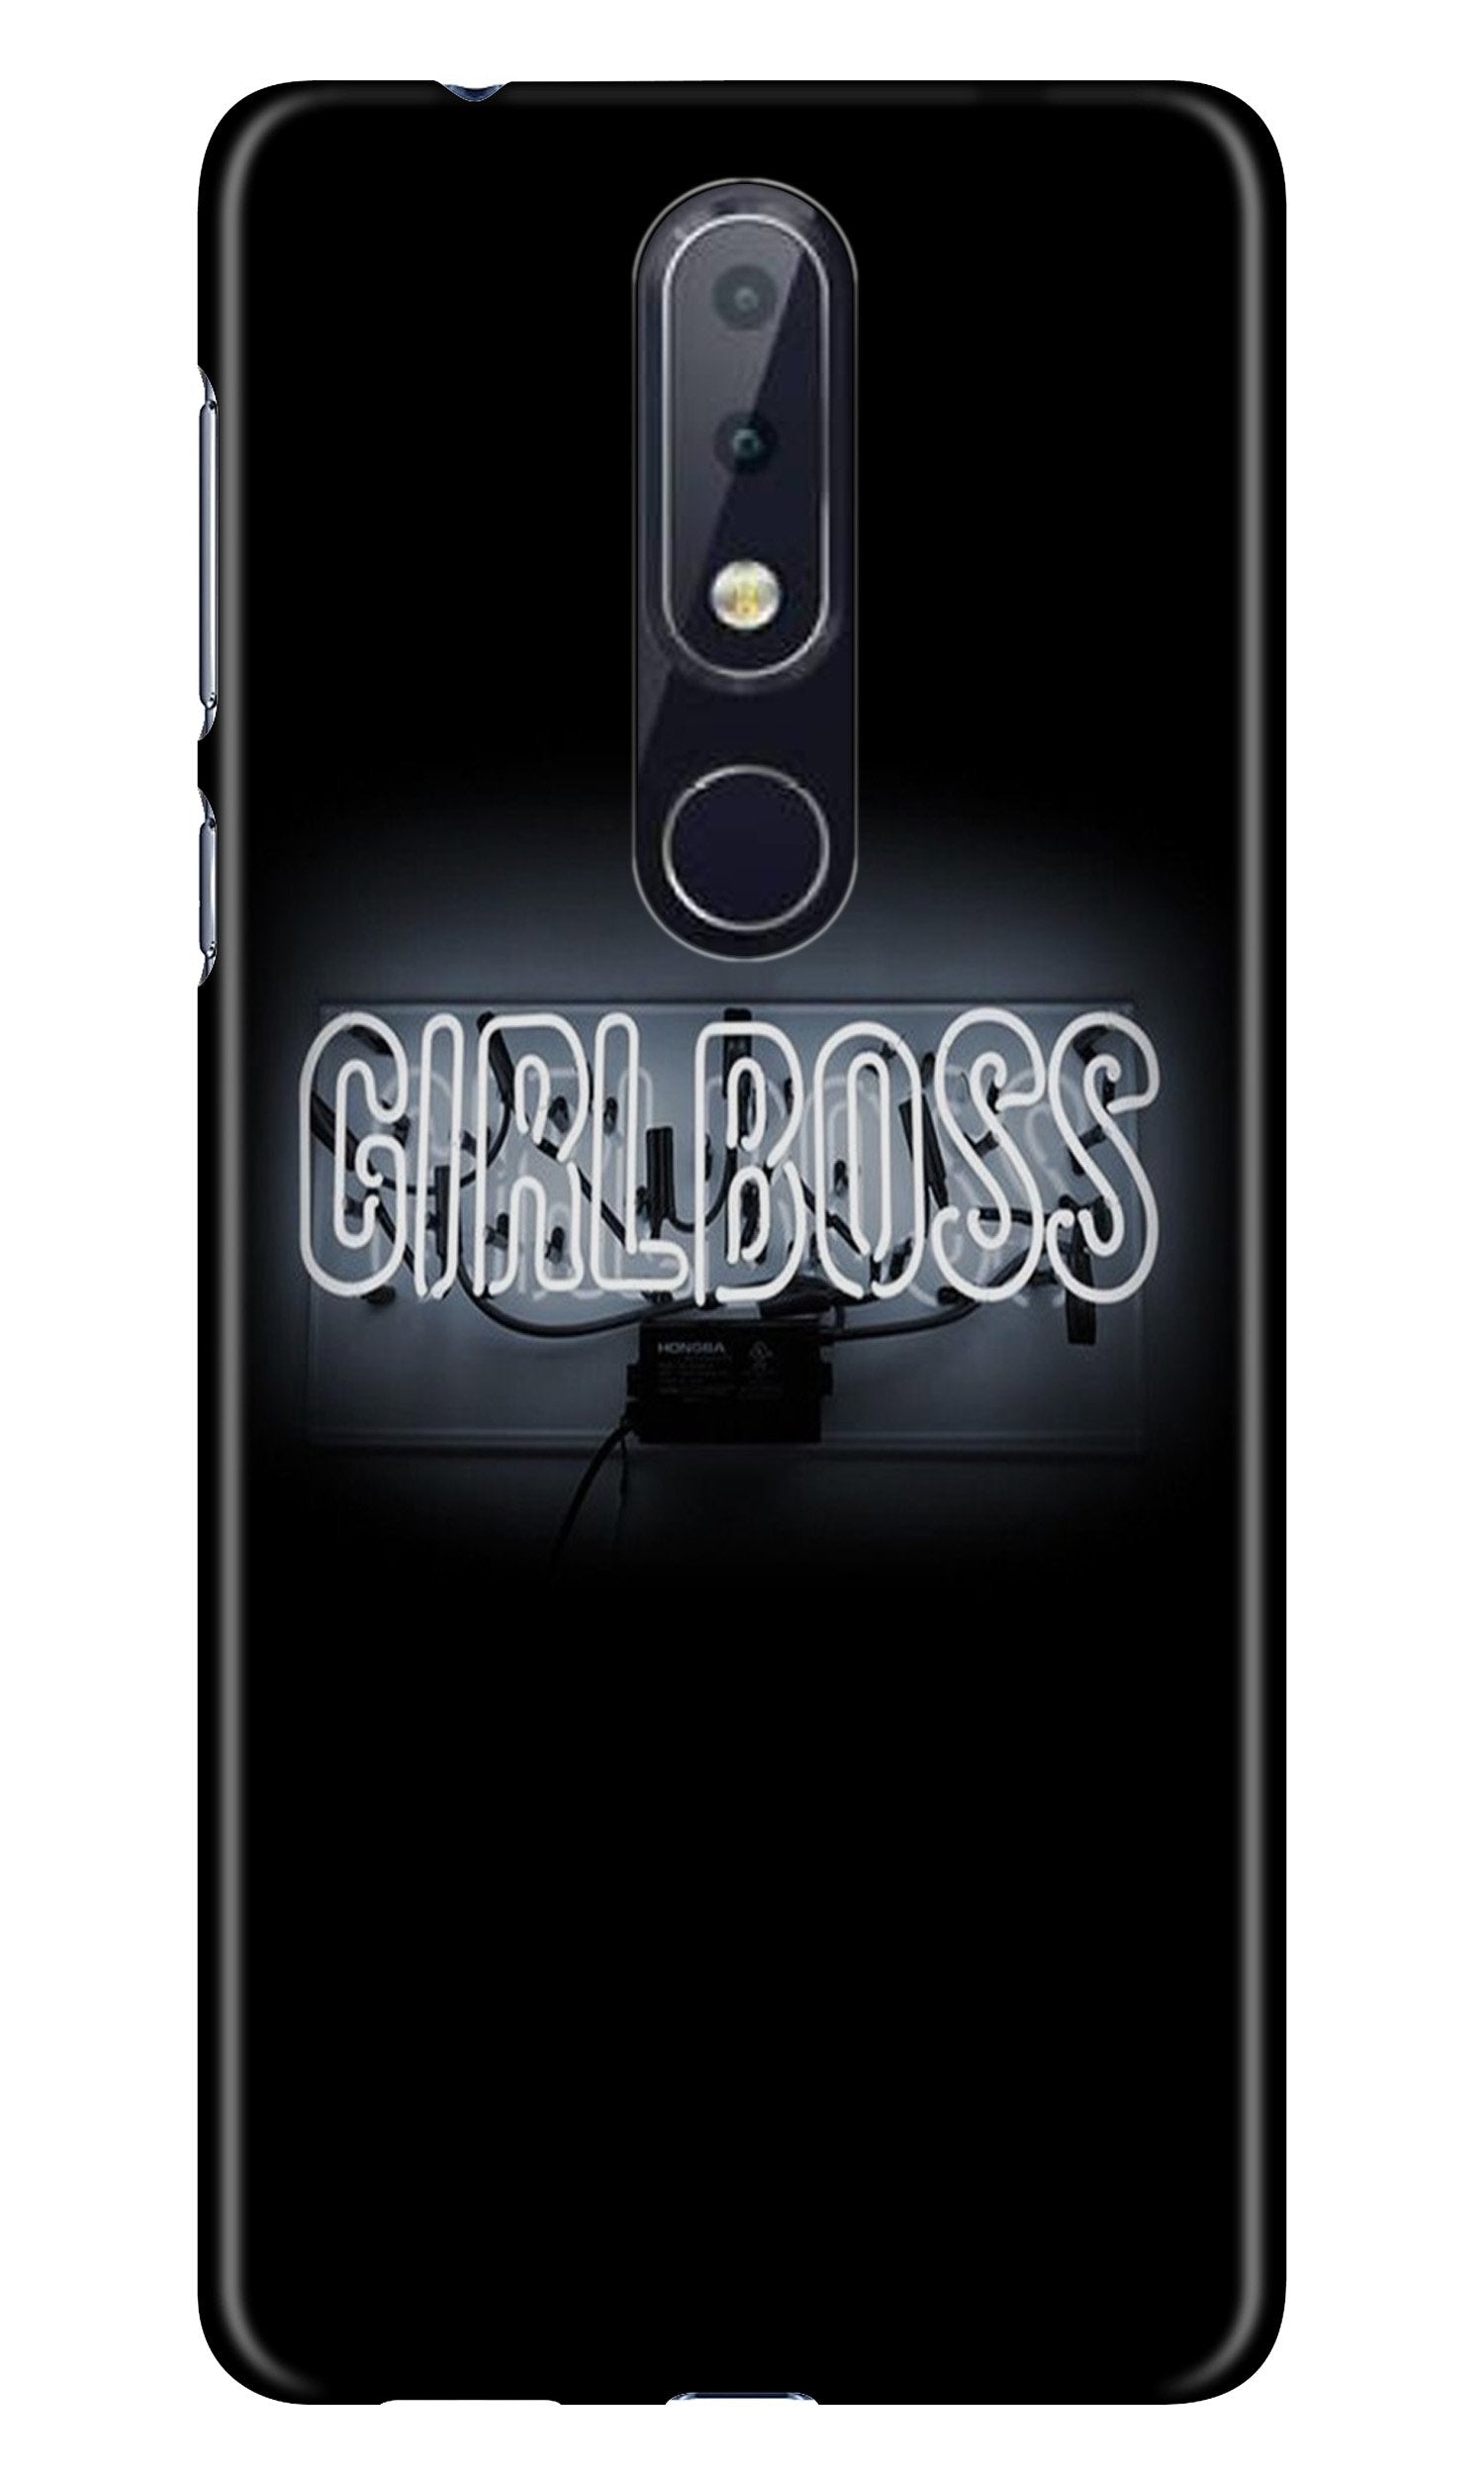 Girl Boss Black Case for Nokia 6.1 Plus (Design No. 268)